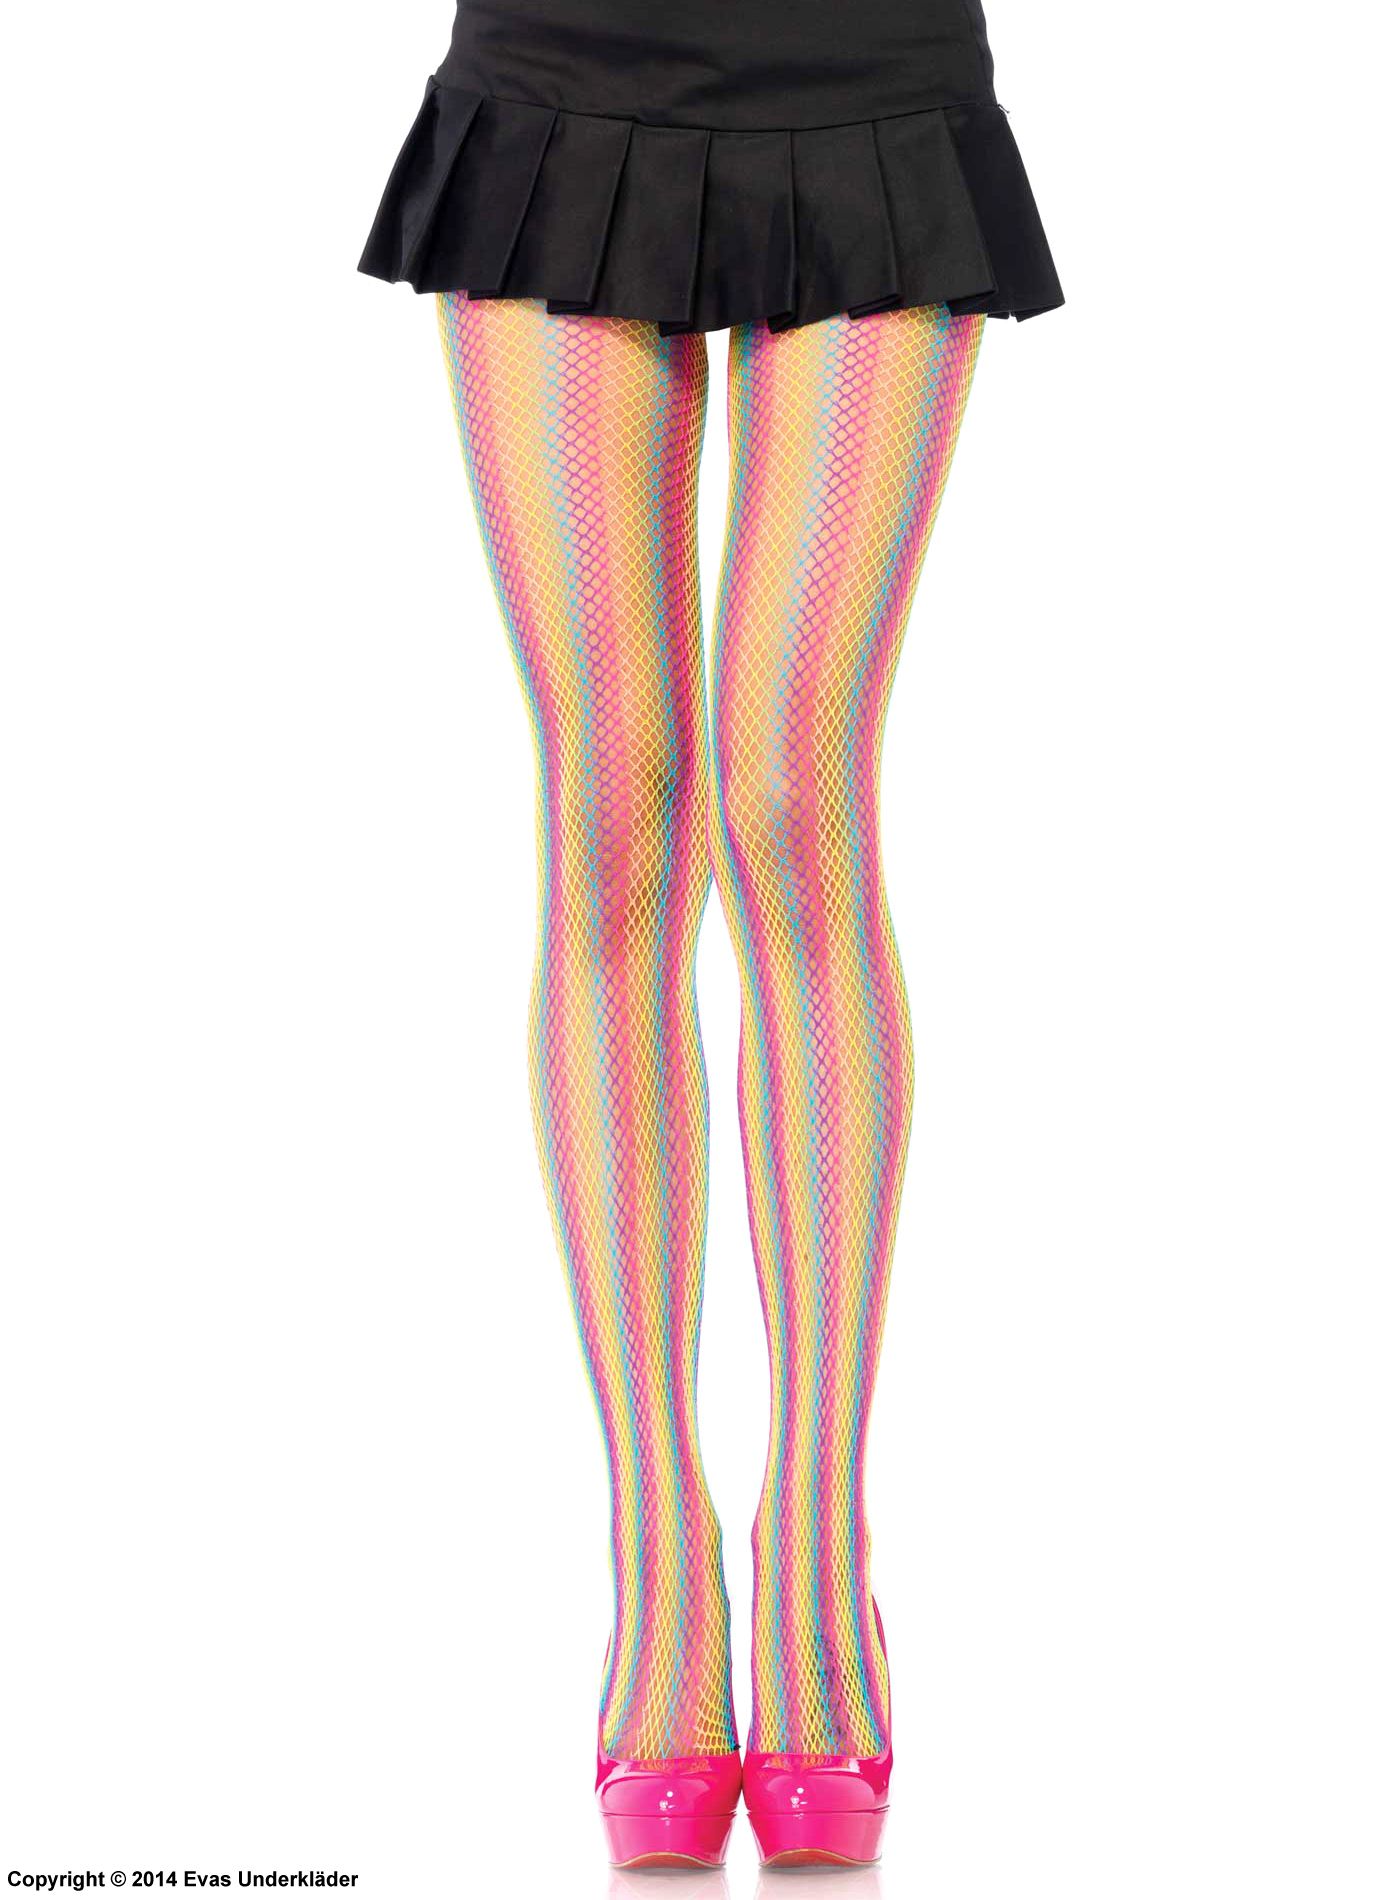 Pantyhose, fishnet, colorful stripes